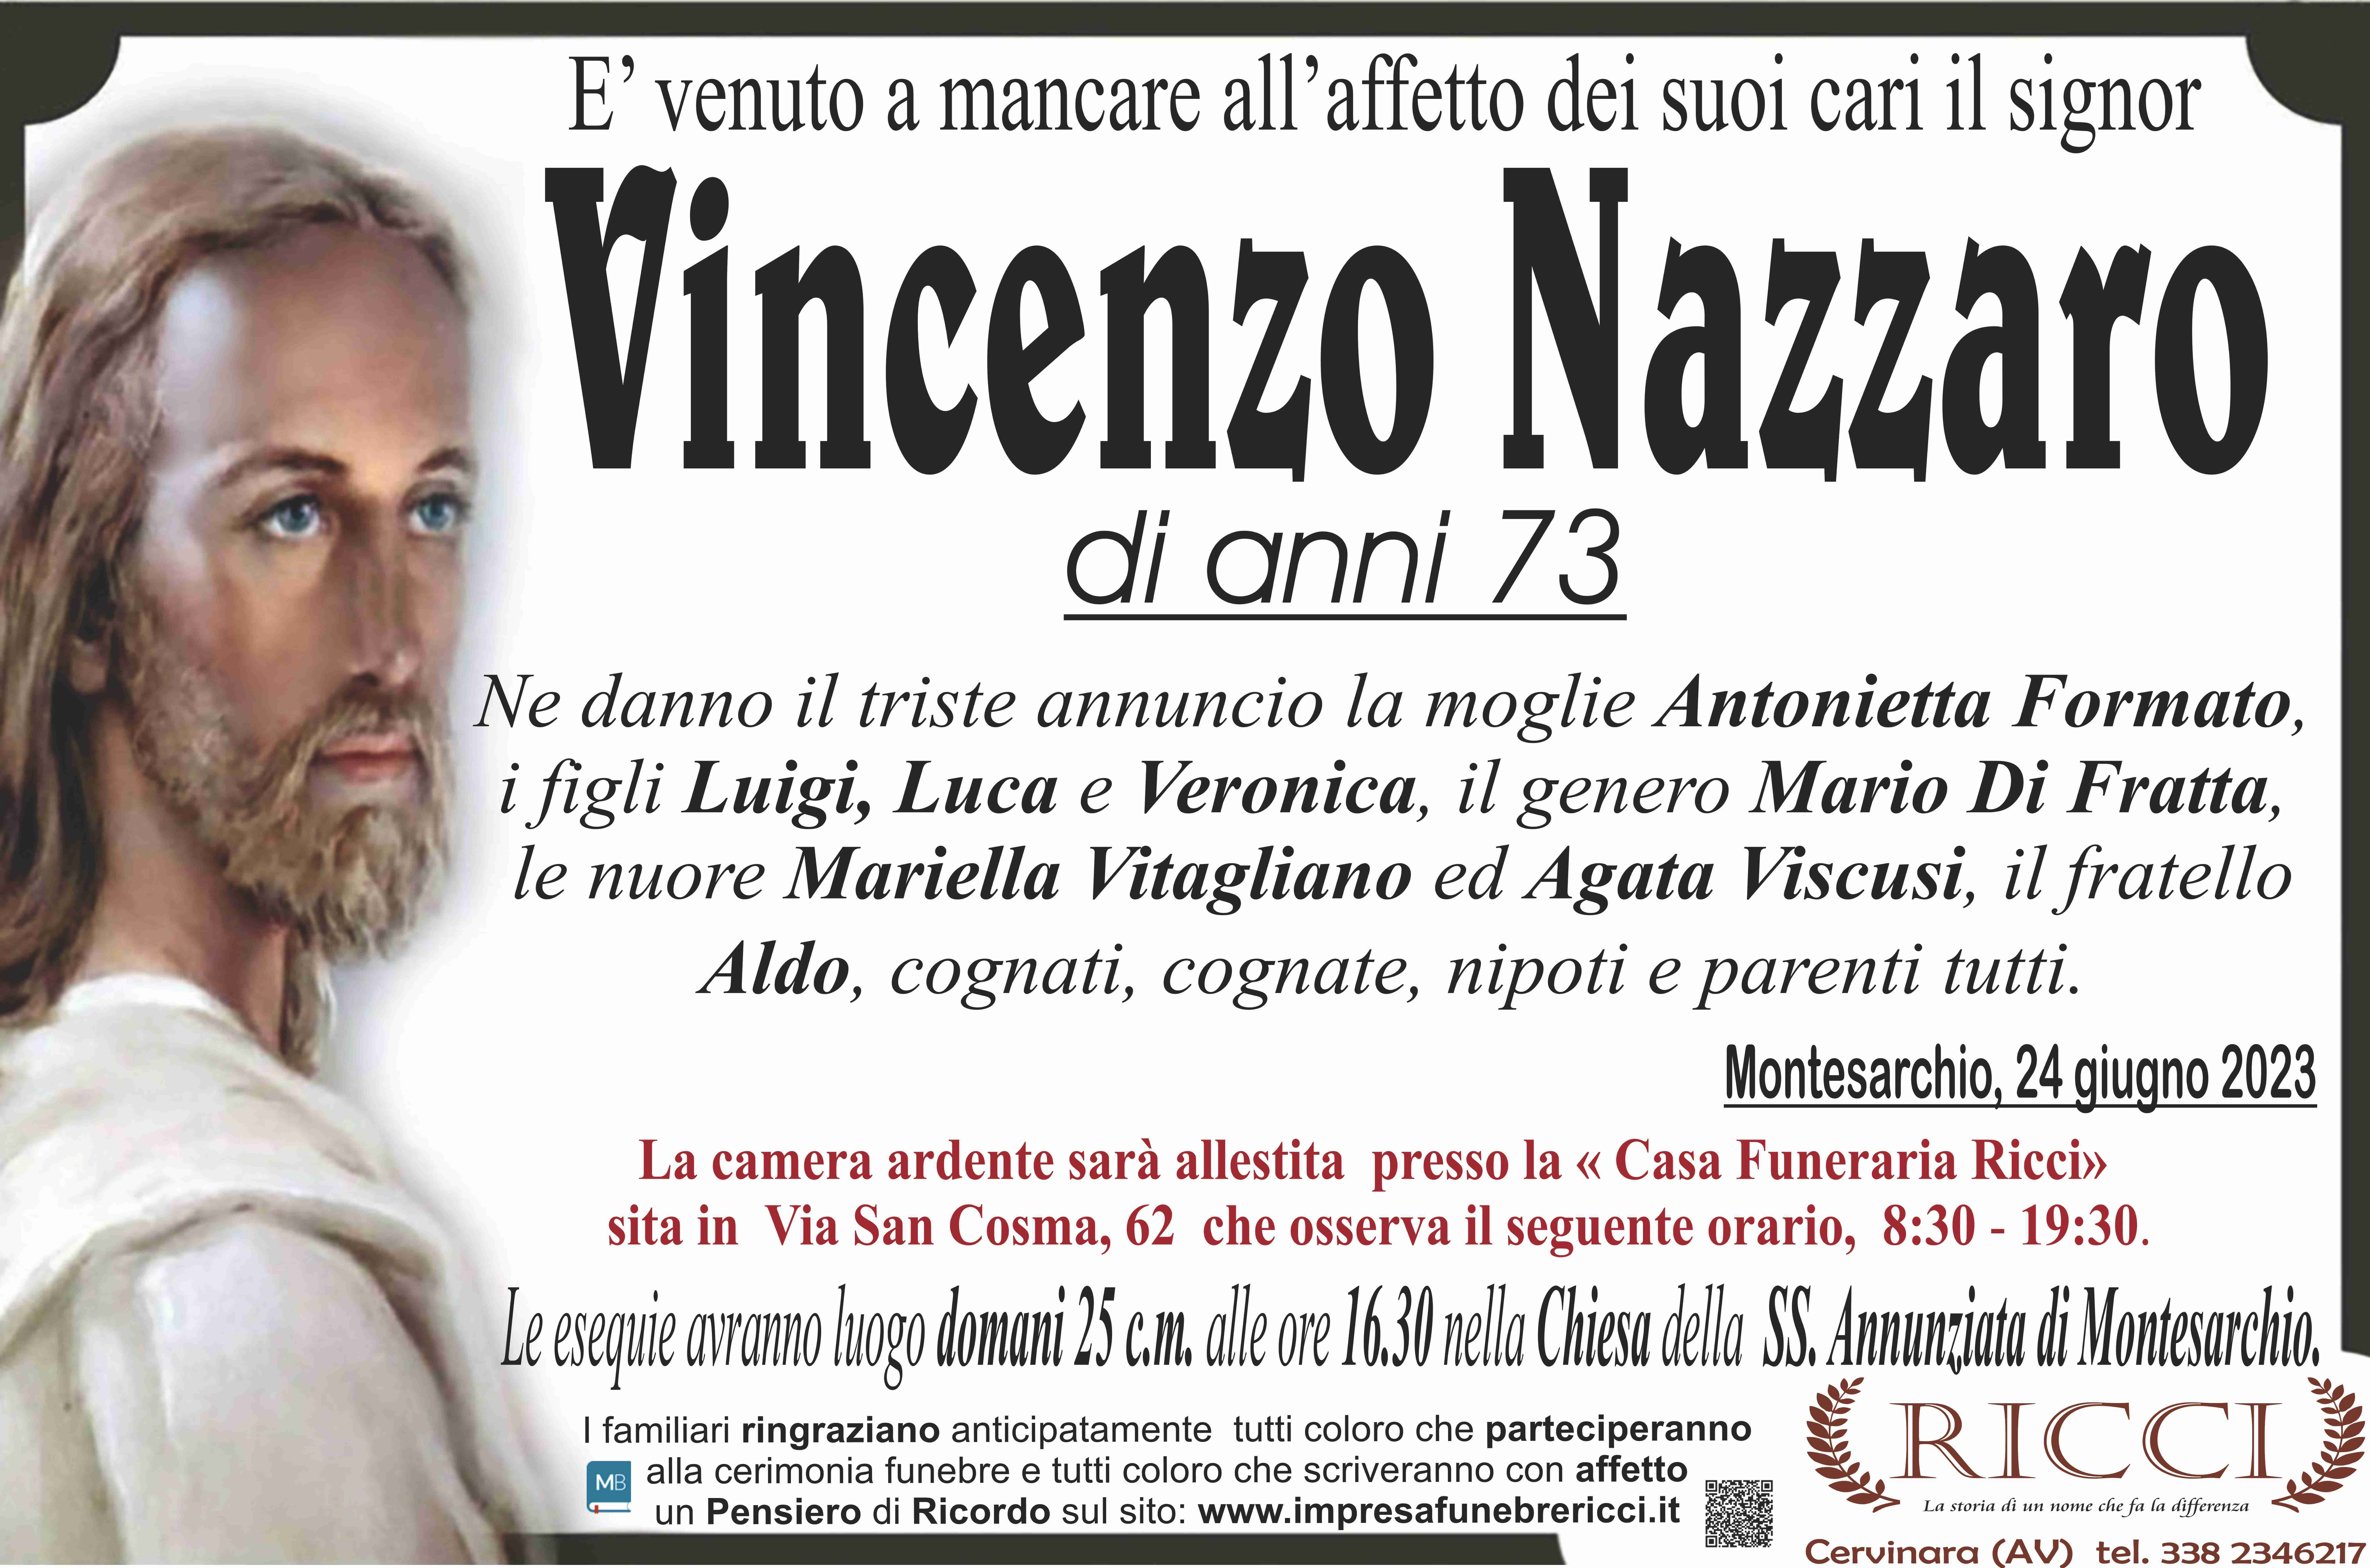 Vincenzo Nazzaro